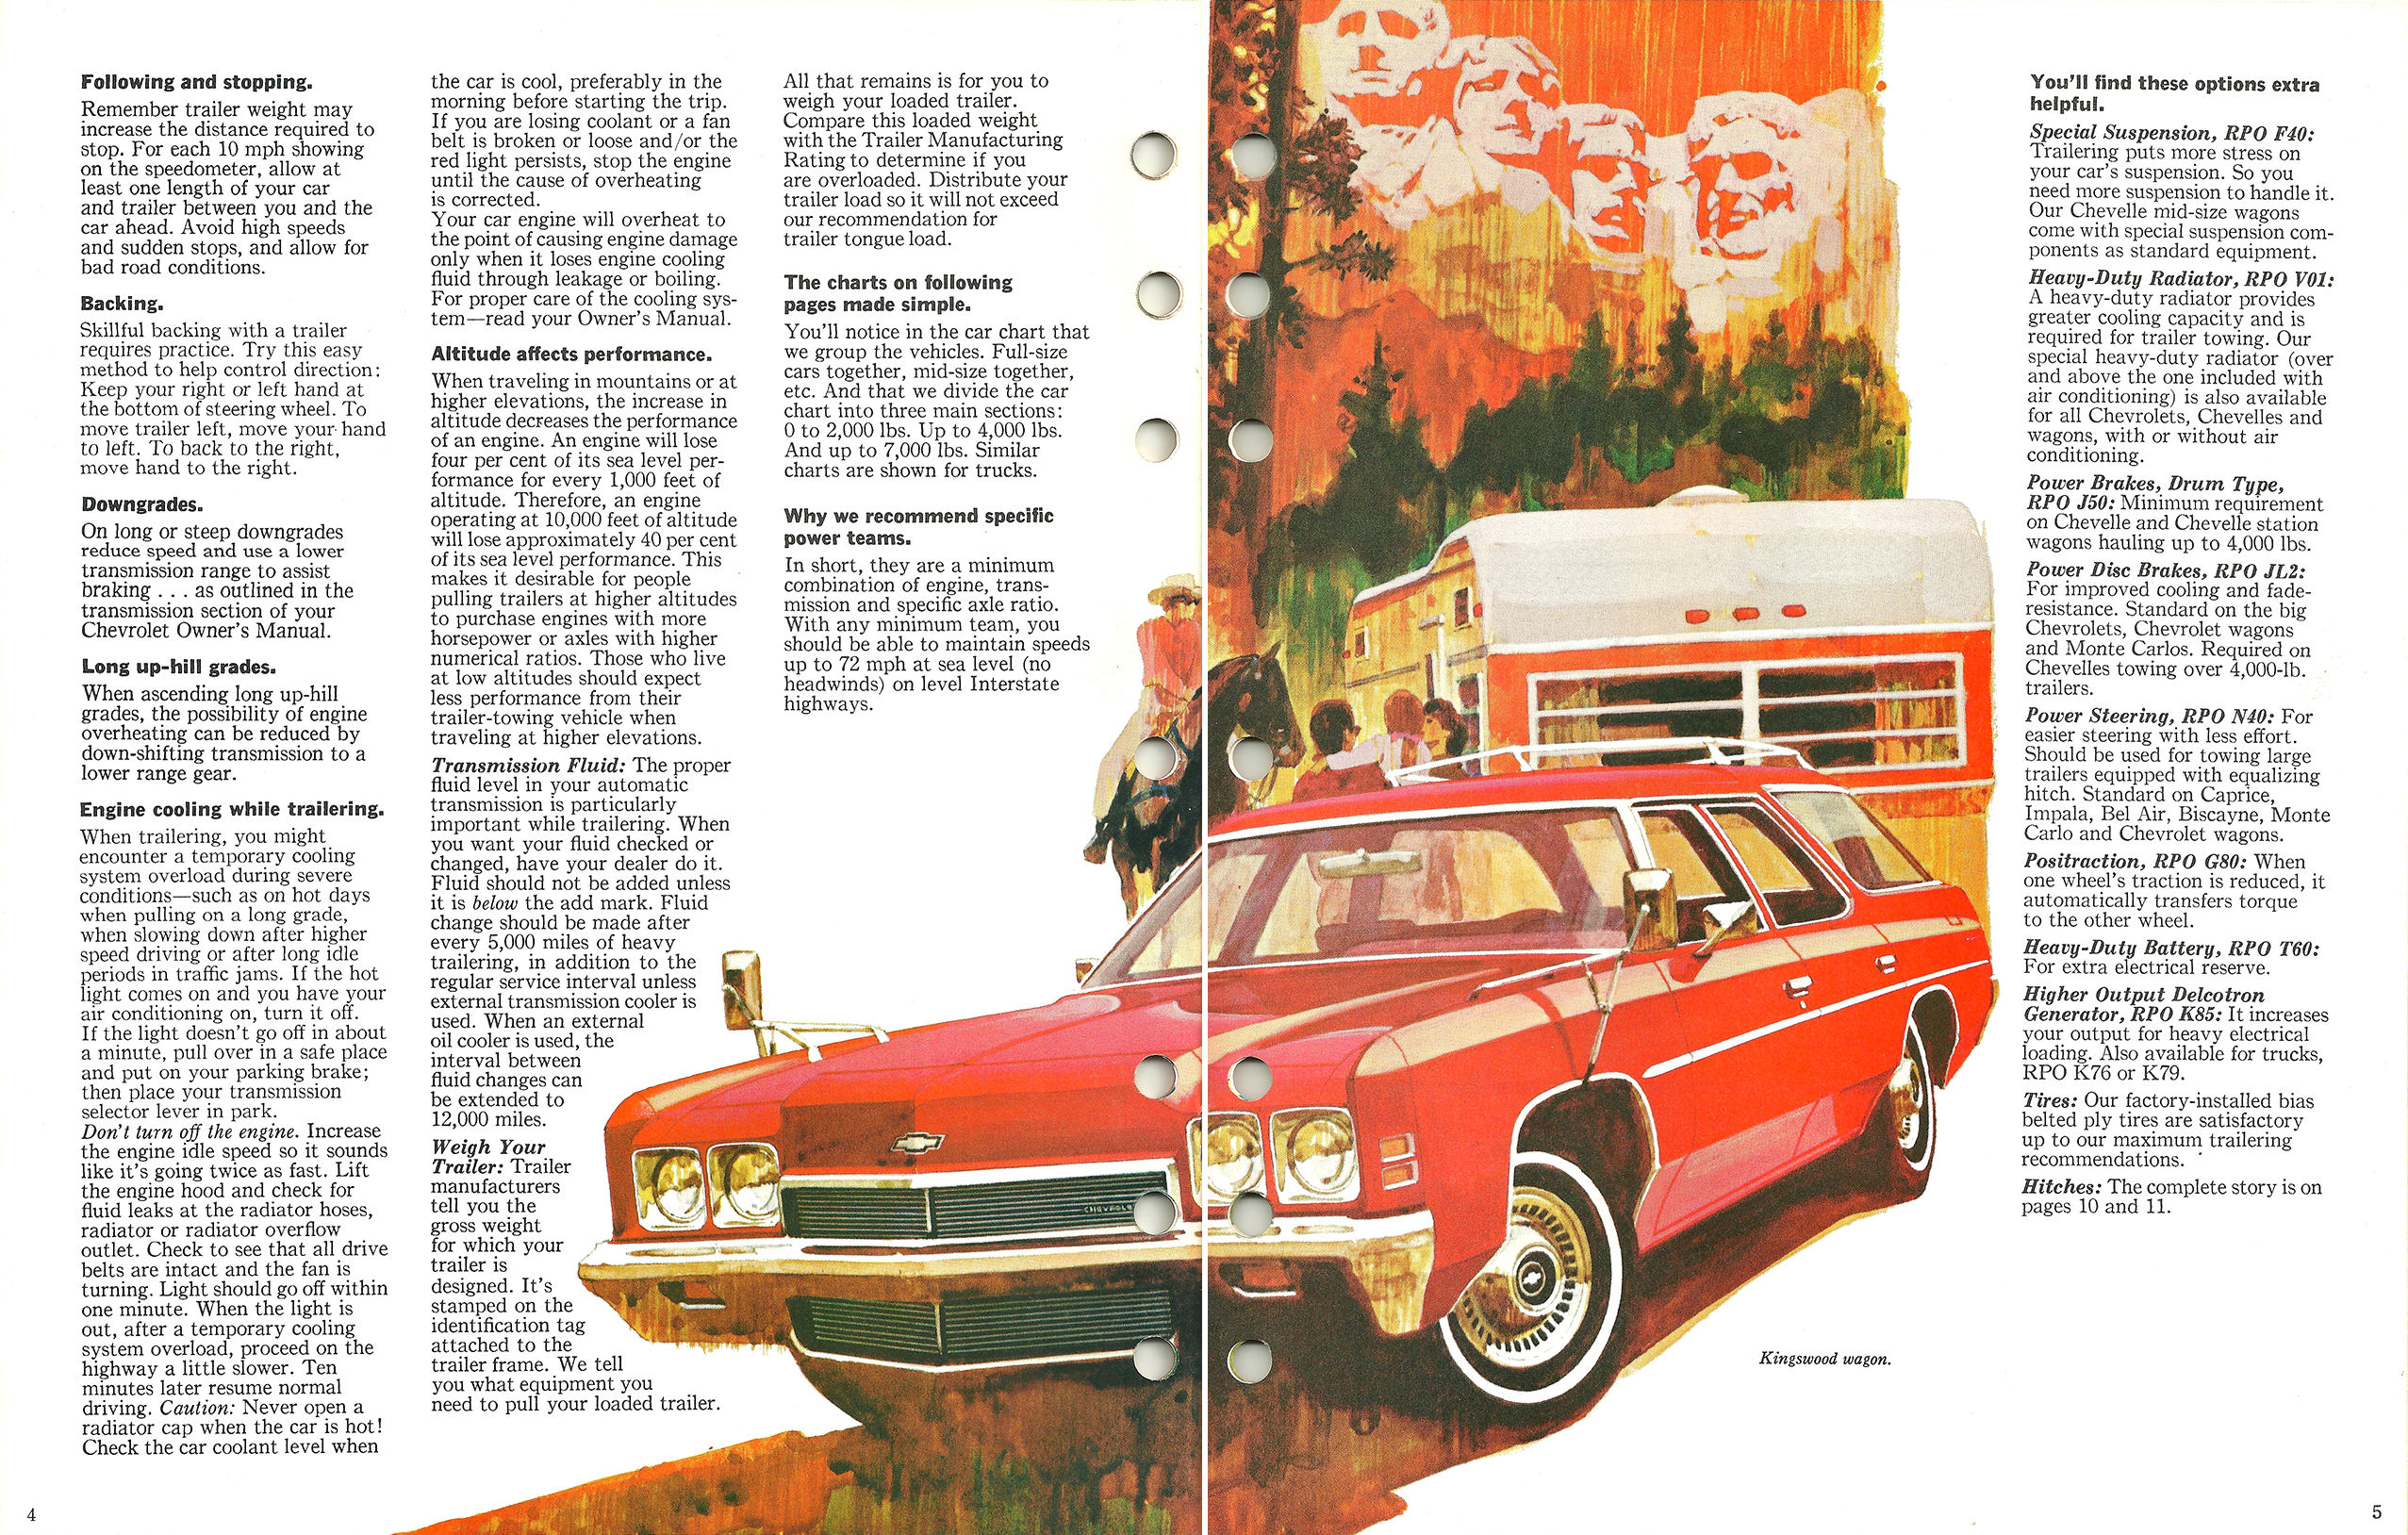 1972_Chevrolet_Trailering_Guide-04-05